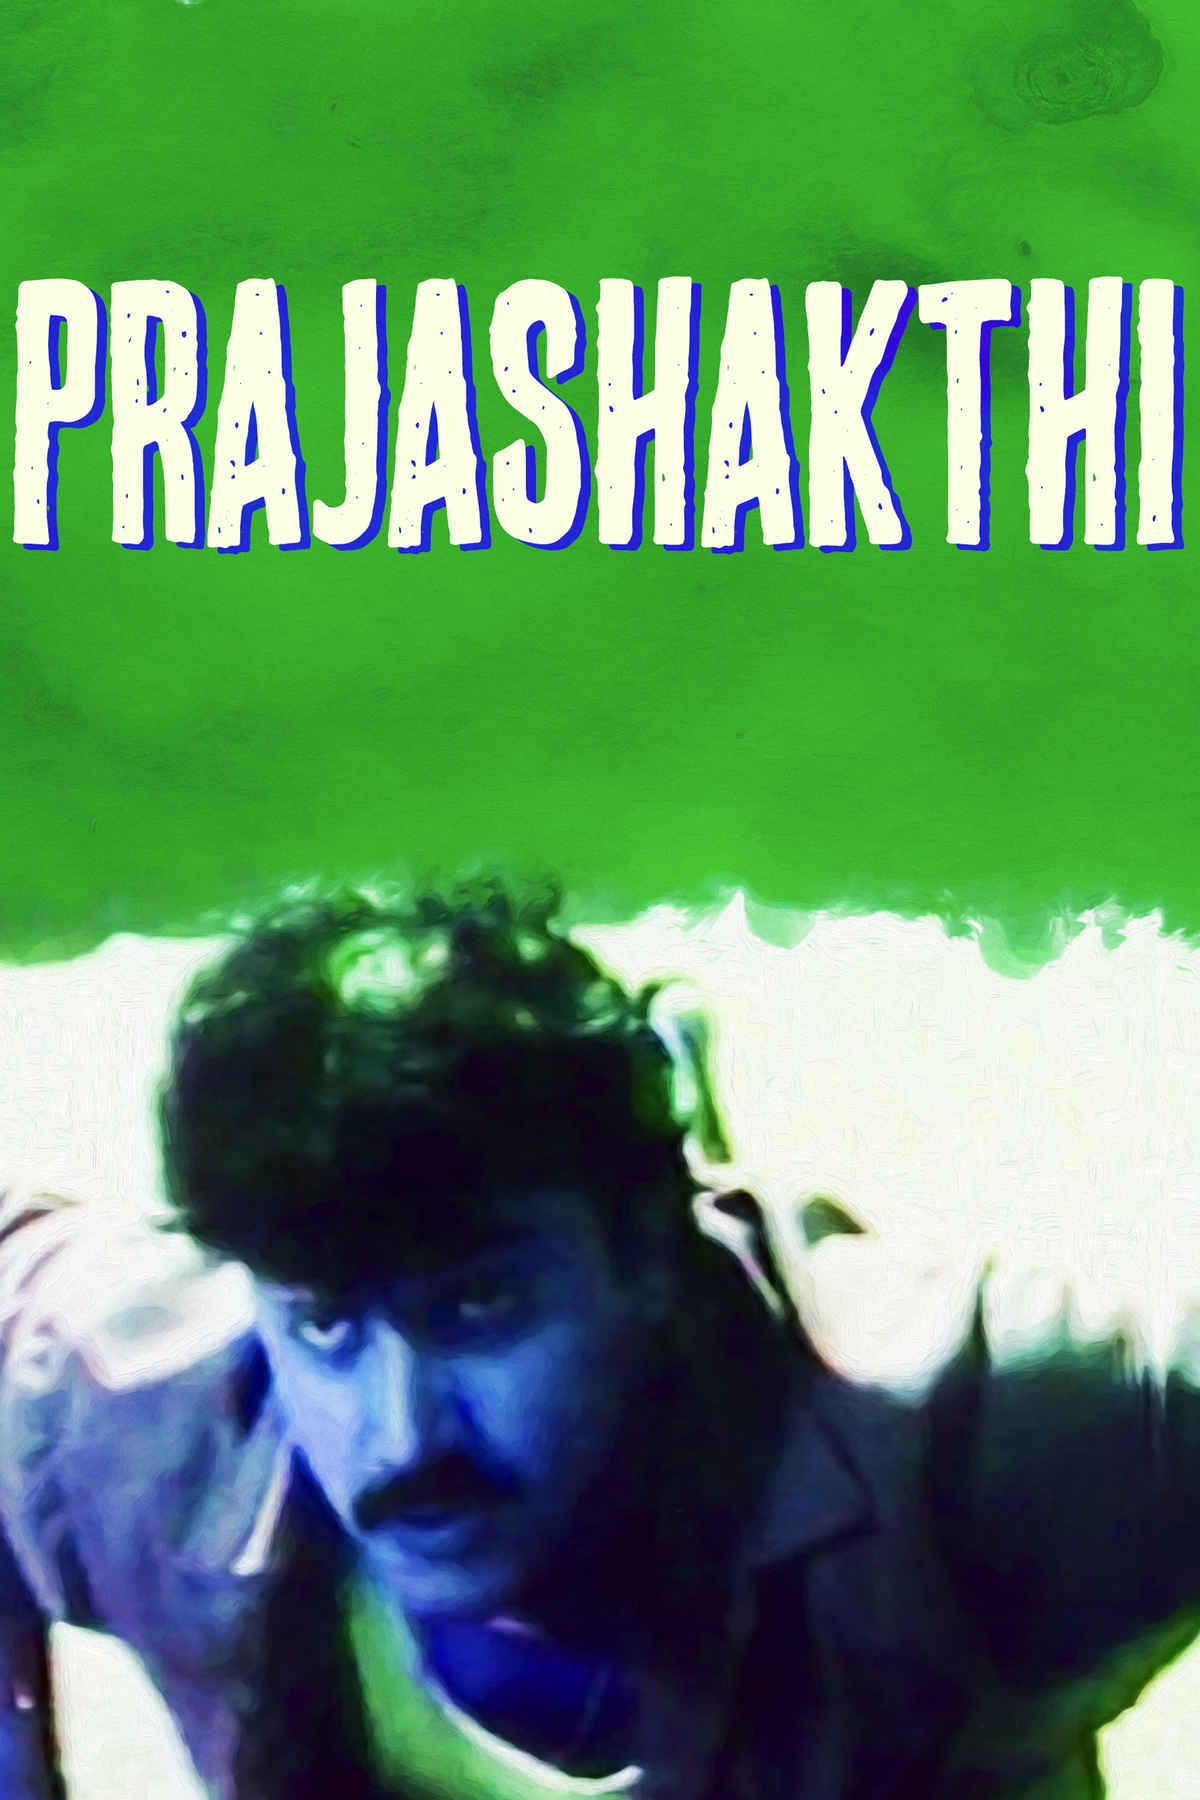 Prajashakthi